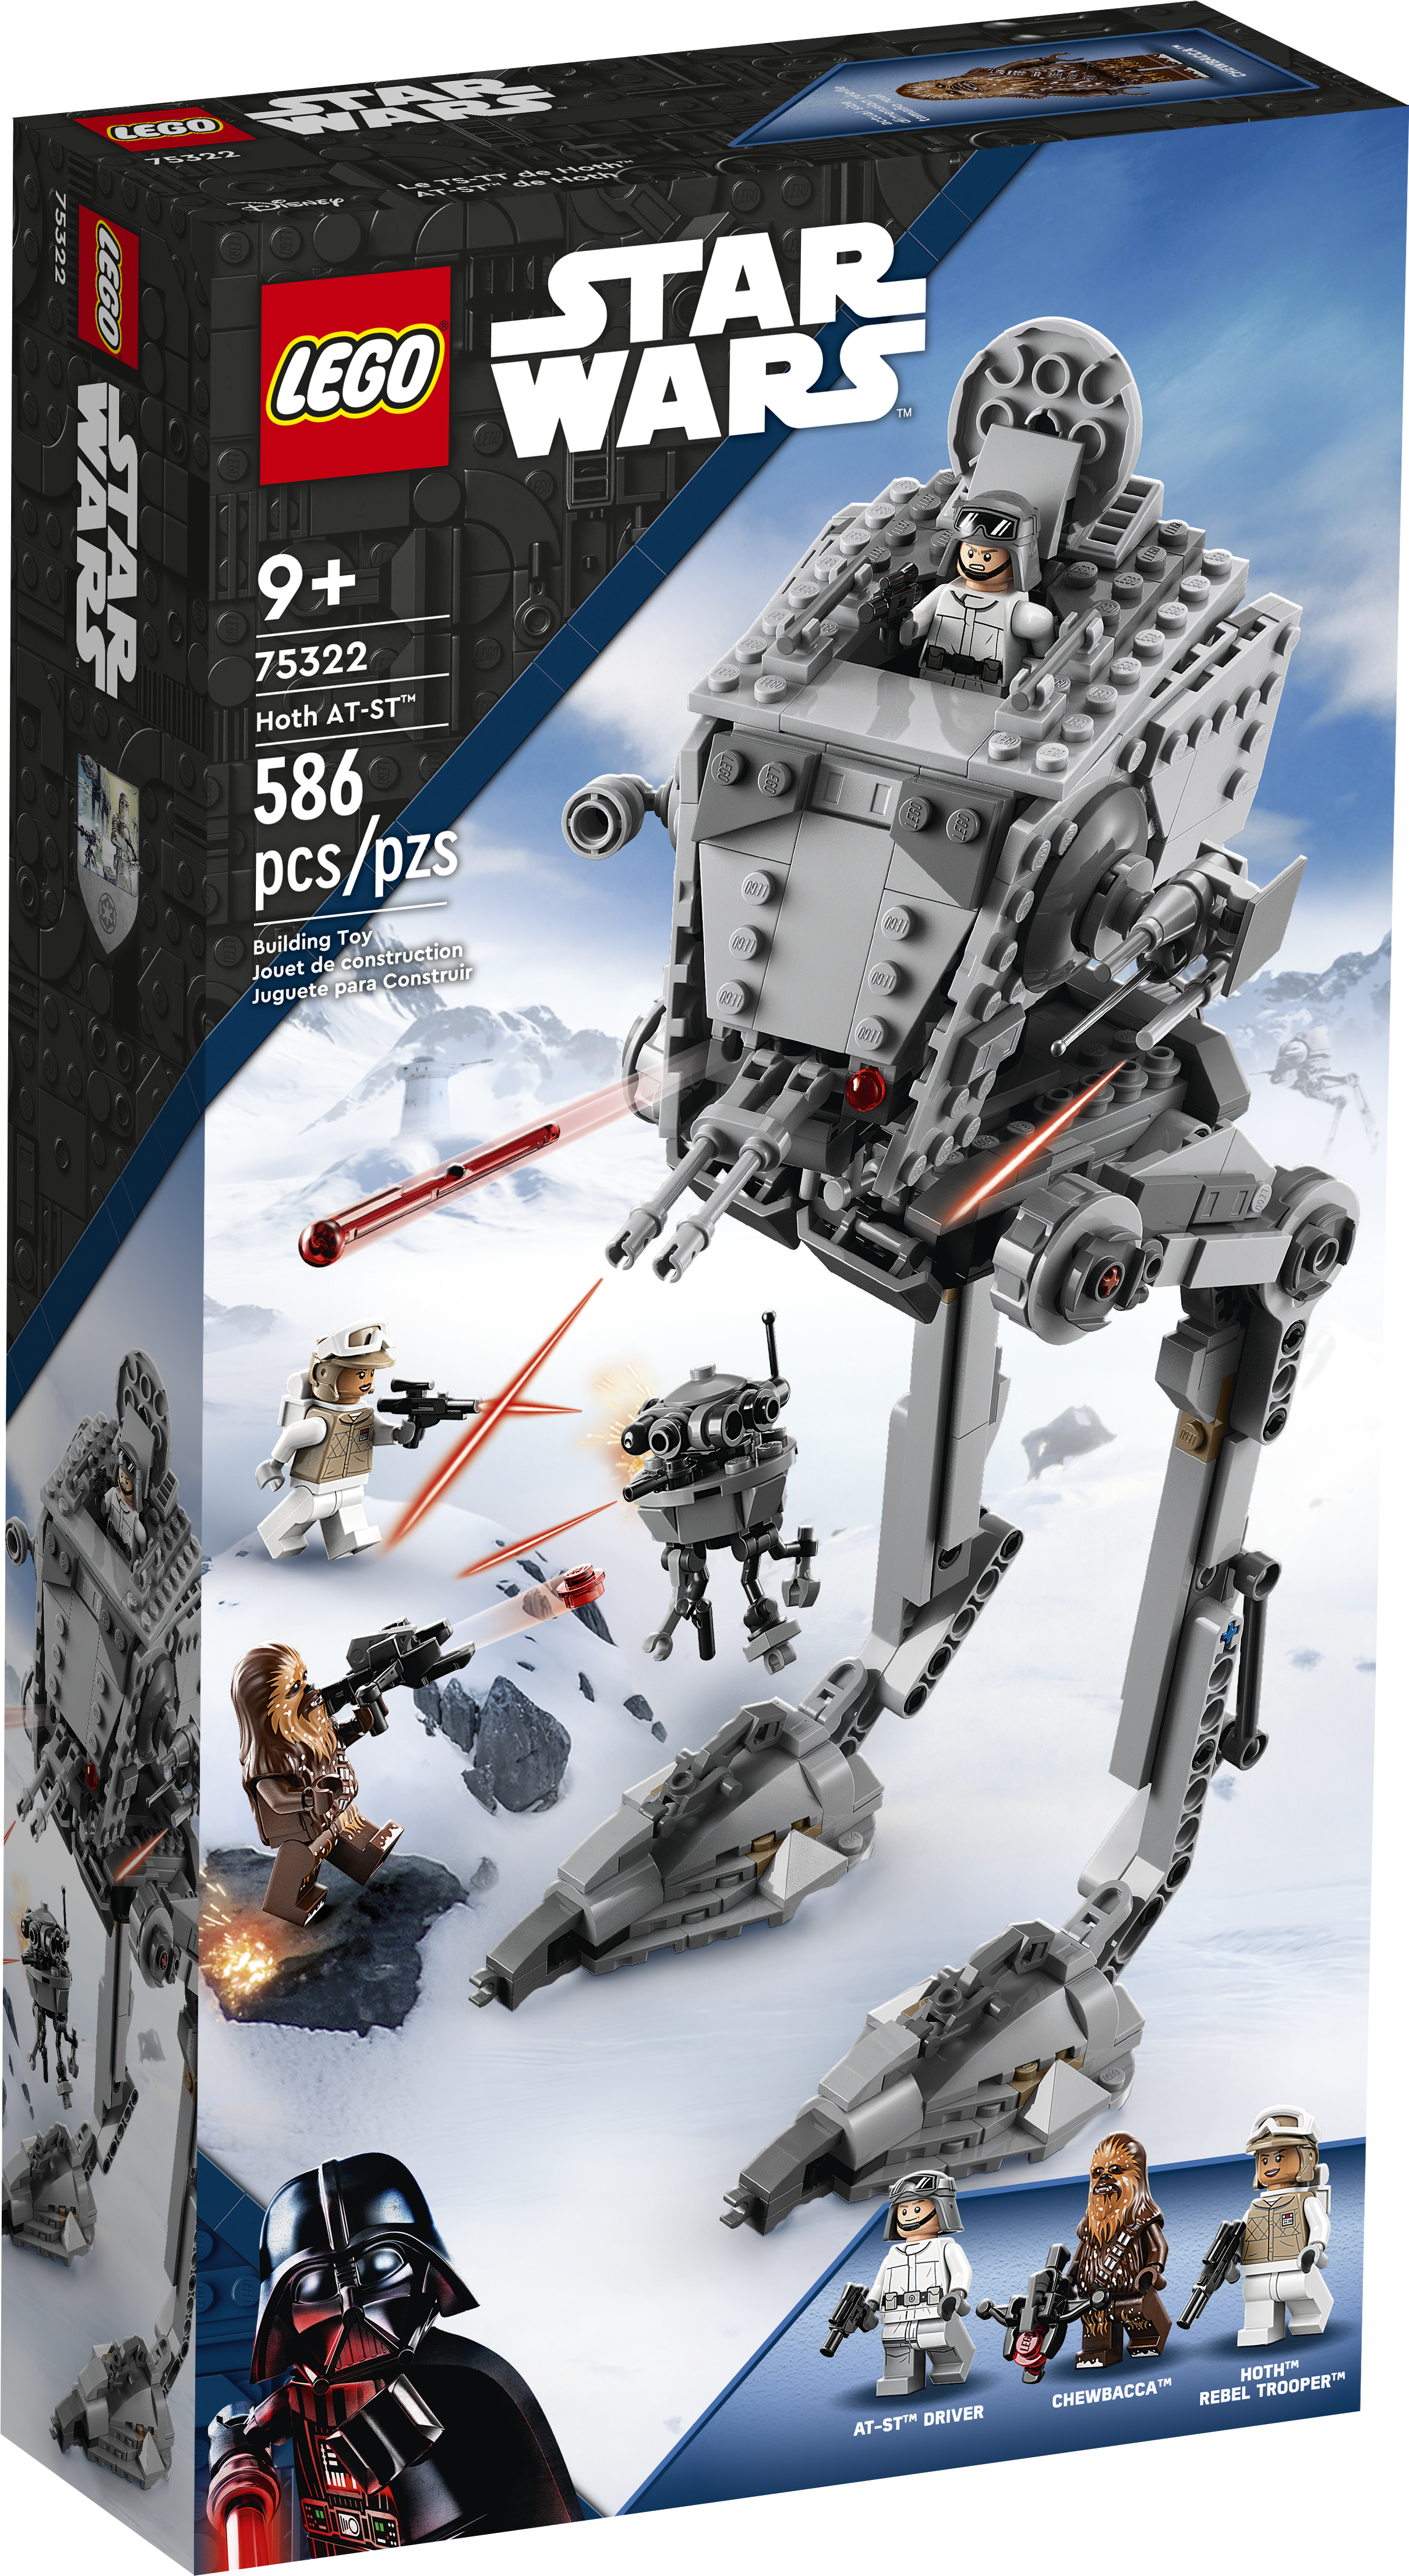 Details about   Star Wars Nano Building Blocks Gift INC BOX Yoda R2D2 BB8 UK Like Mini Lego 